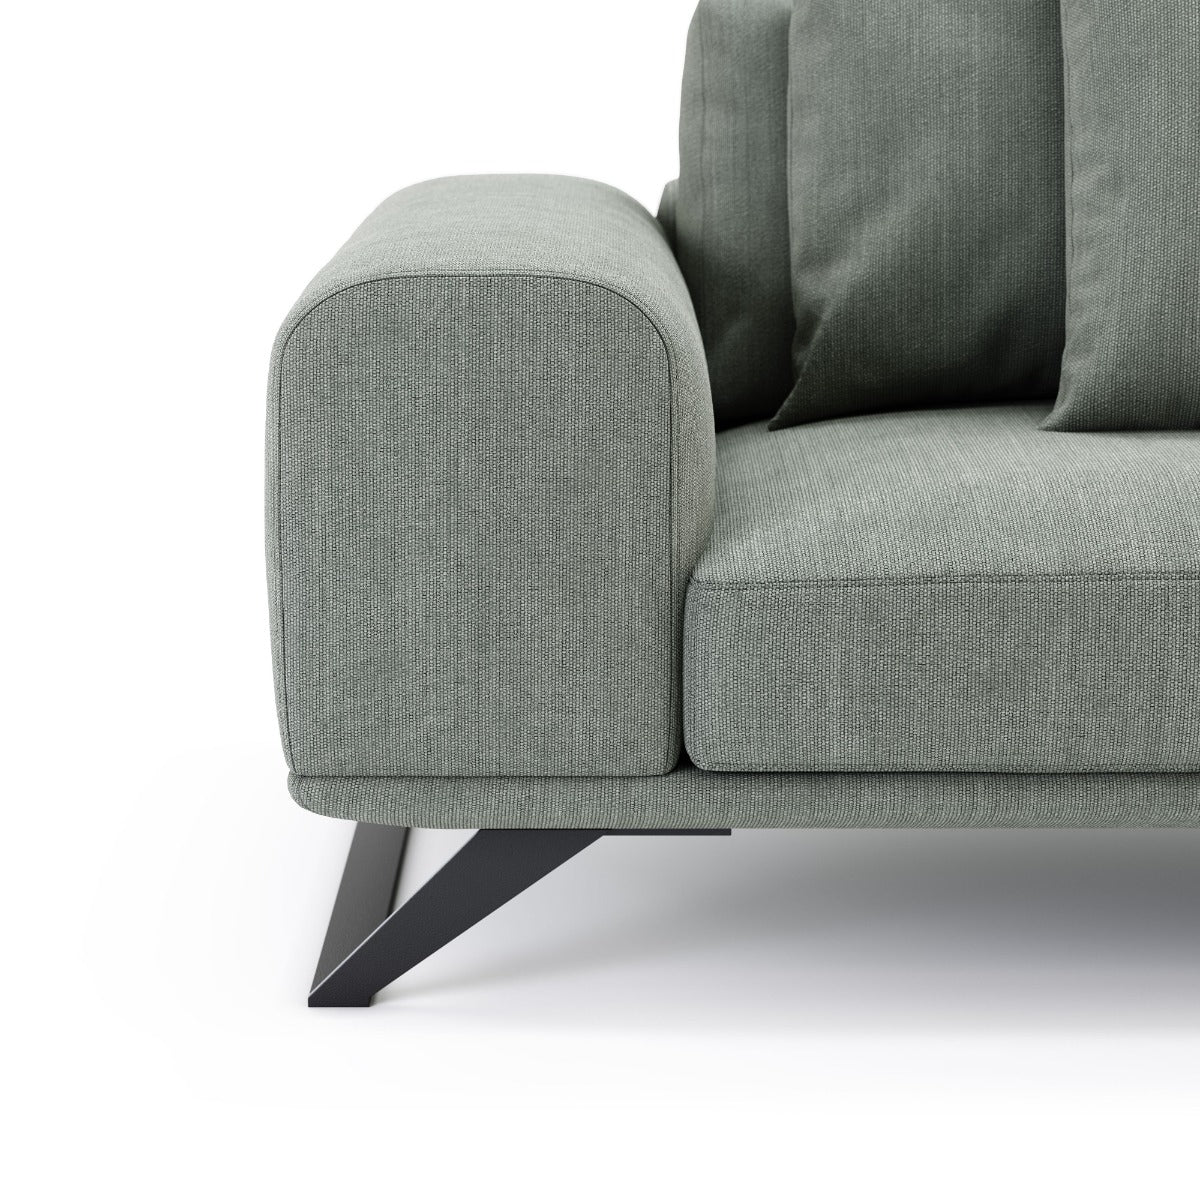 Domkapa Aniston Chaise Sofa - Customisable | Modern Furniture + Decor